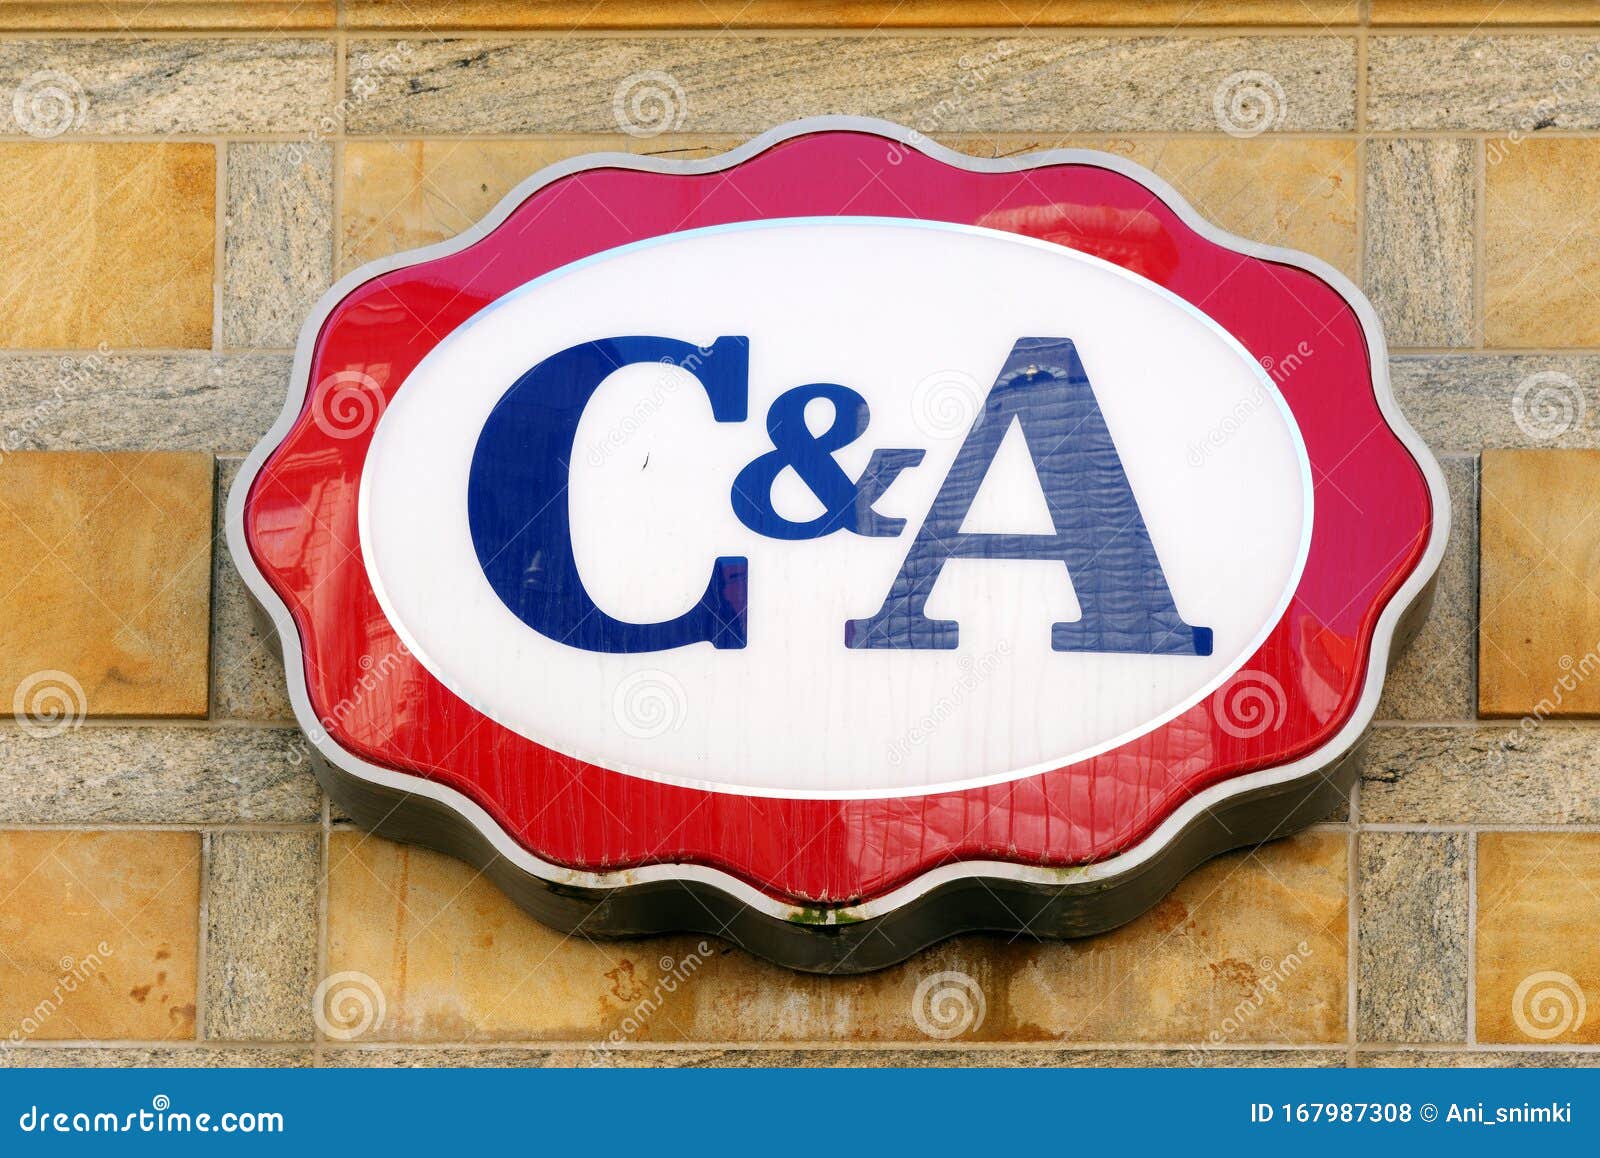 C&a Brand Logo, Munich, Germany Editorial Stock Photo - Image of ...